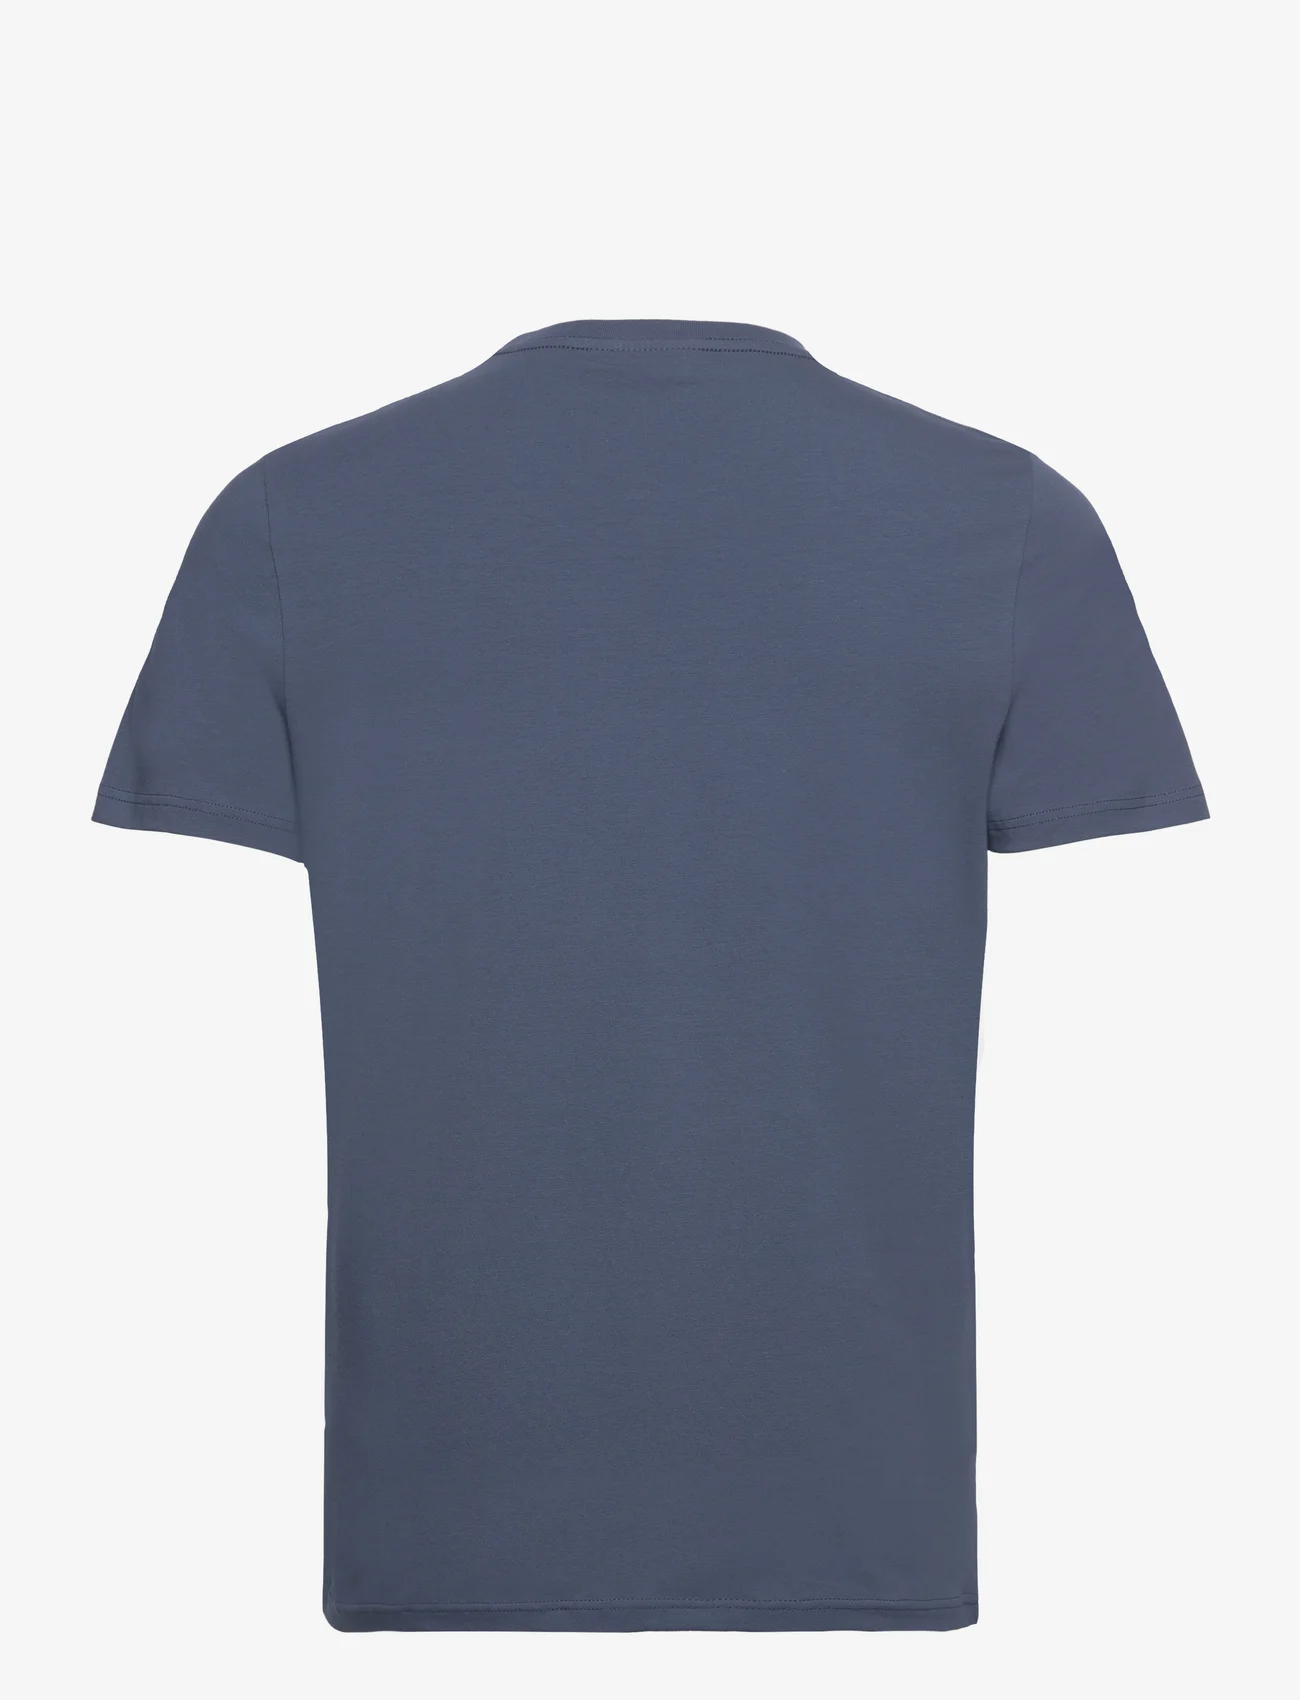 Morris - James Tee - podstawowe koszulki - blue - 1